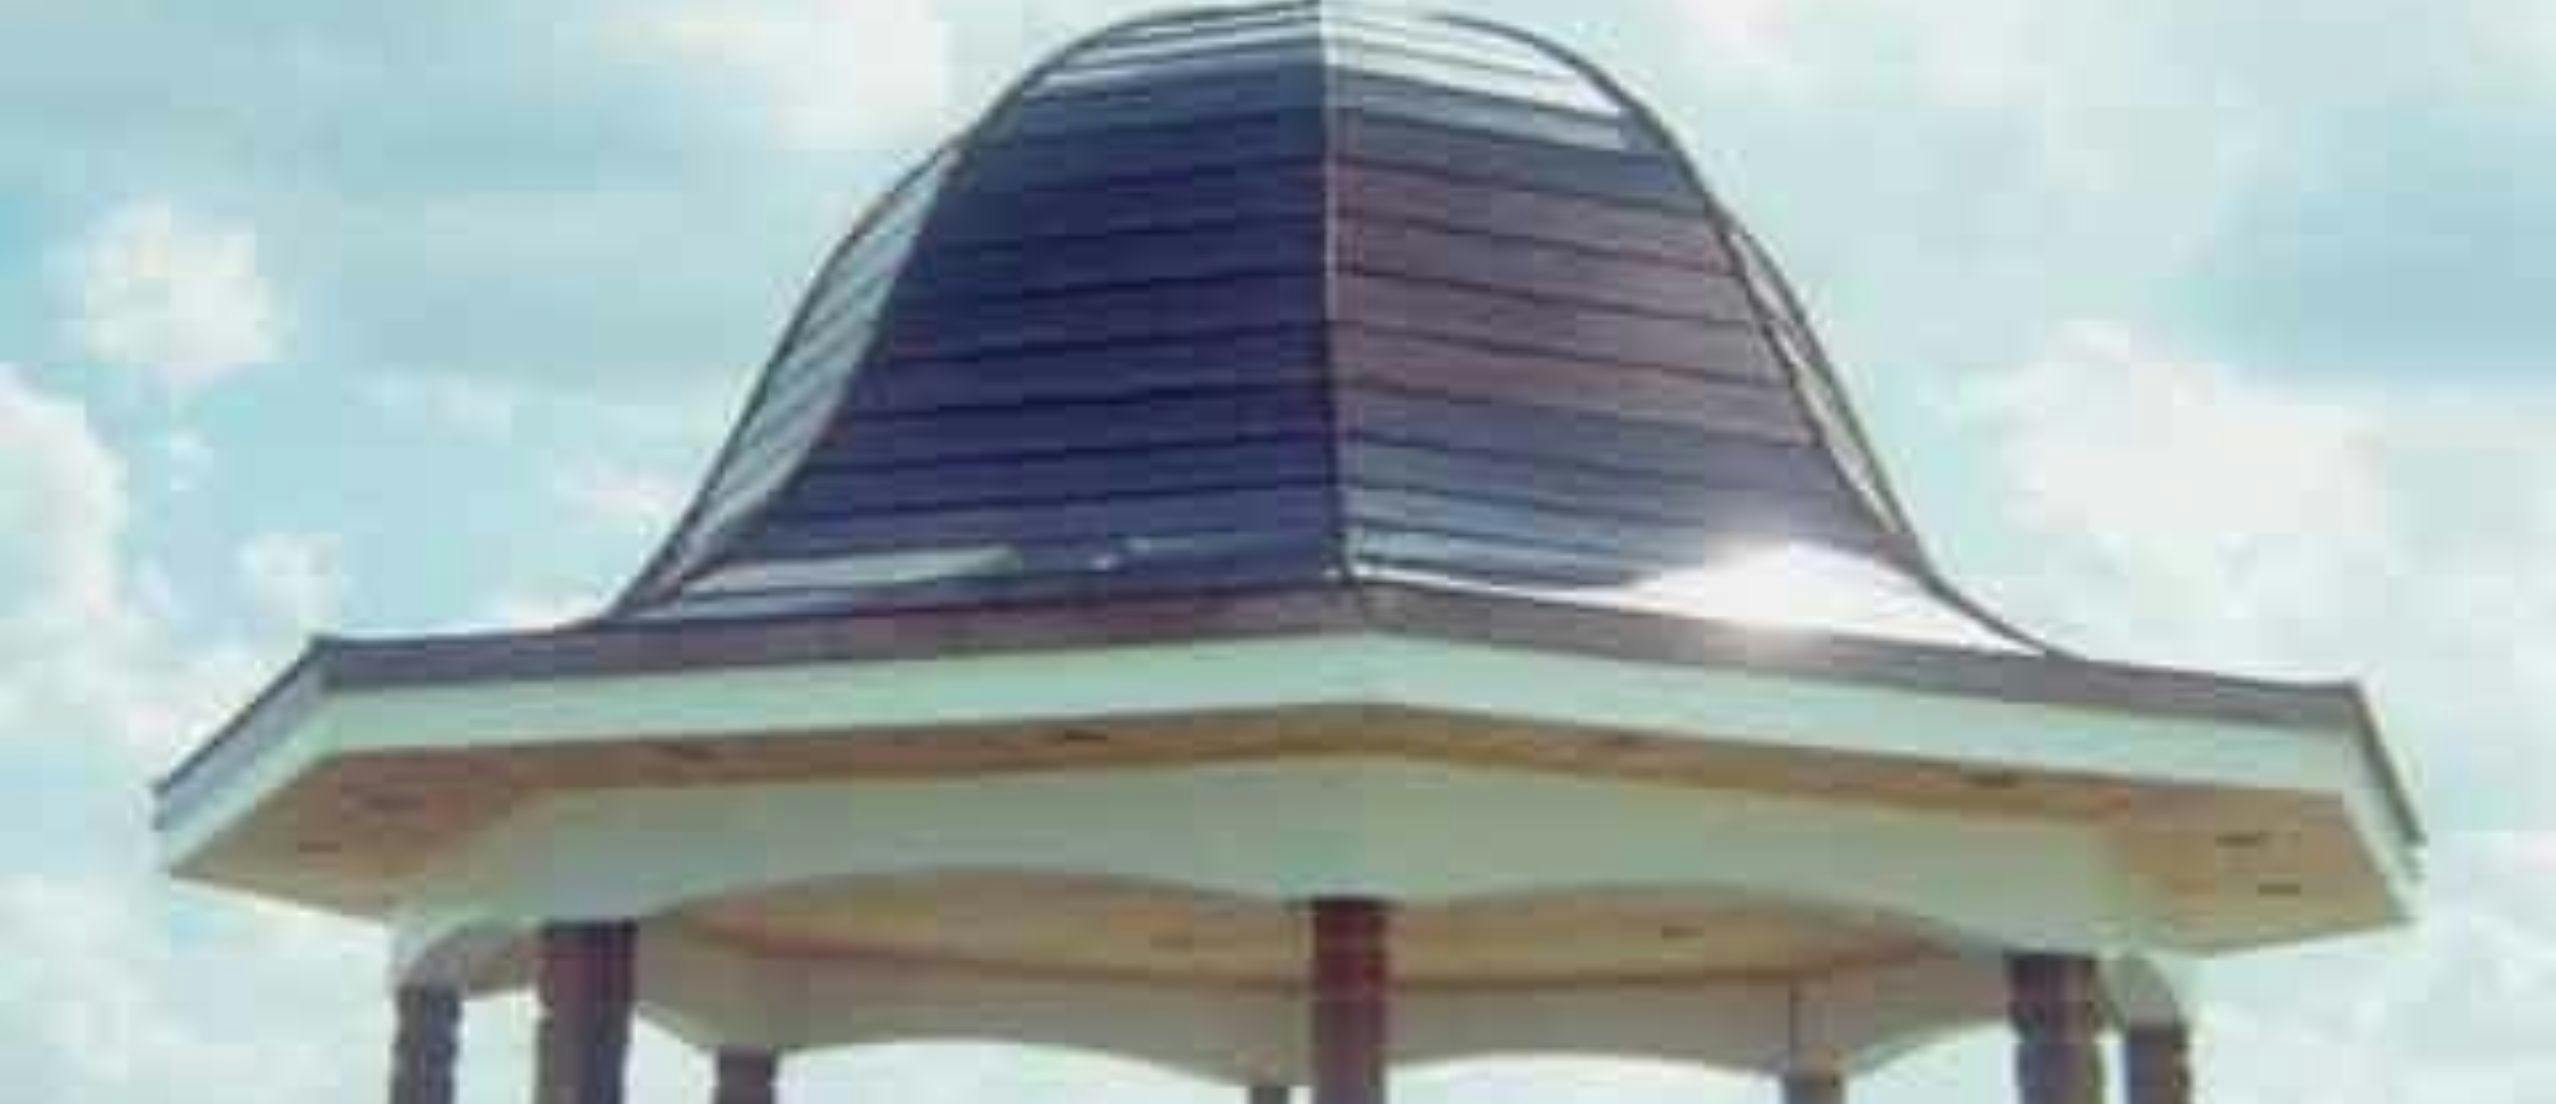 Copper gazebo roof bermuda style